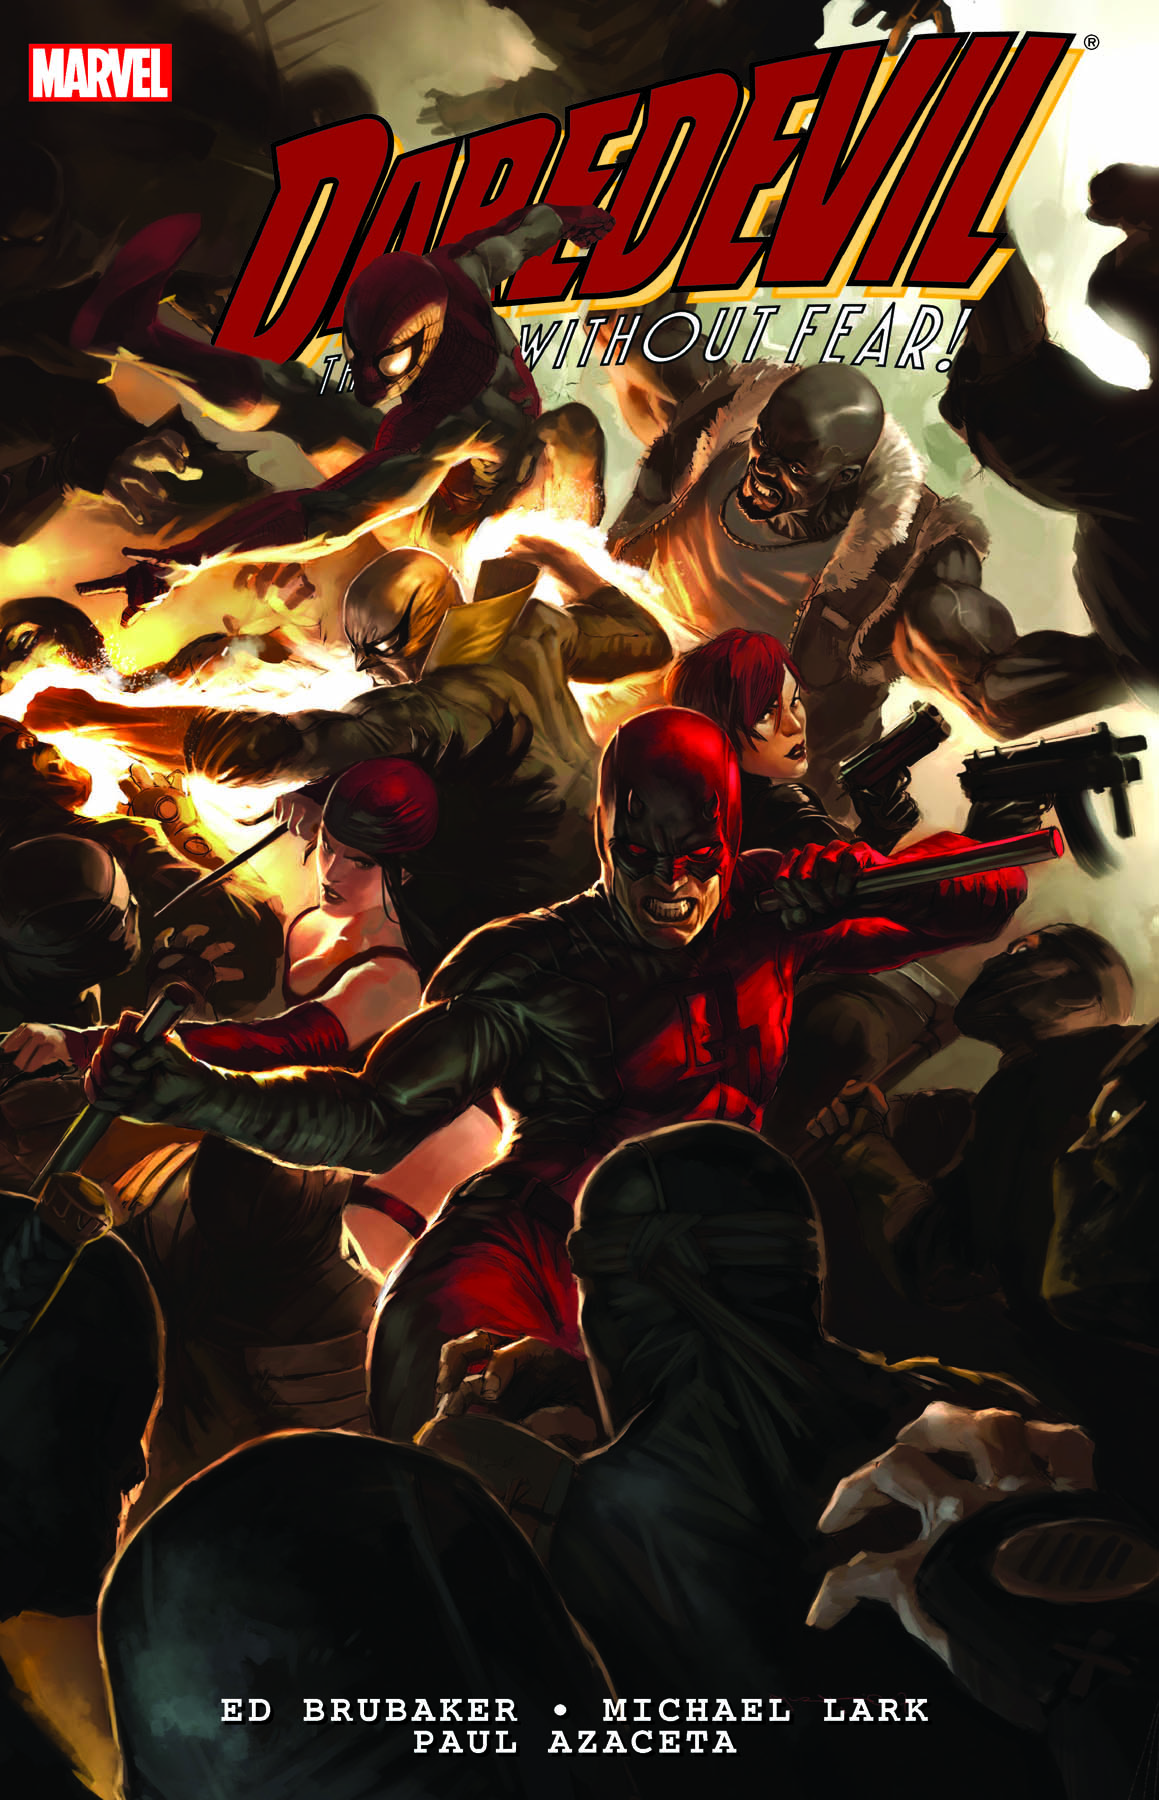 Daredevil by Ed Brubaker & Michael Lark Ultimate Collection Book 2 TPB (Trade Paperback)